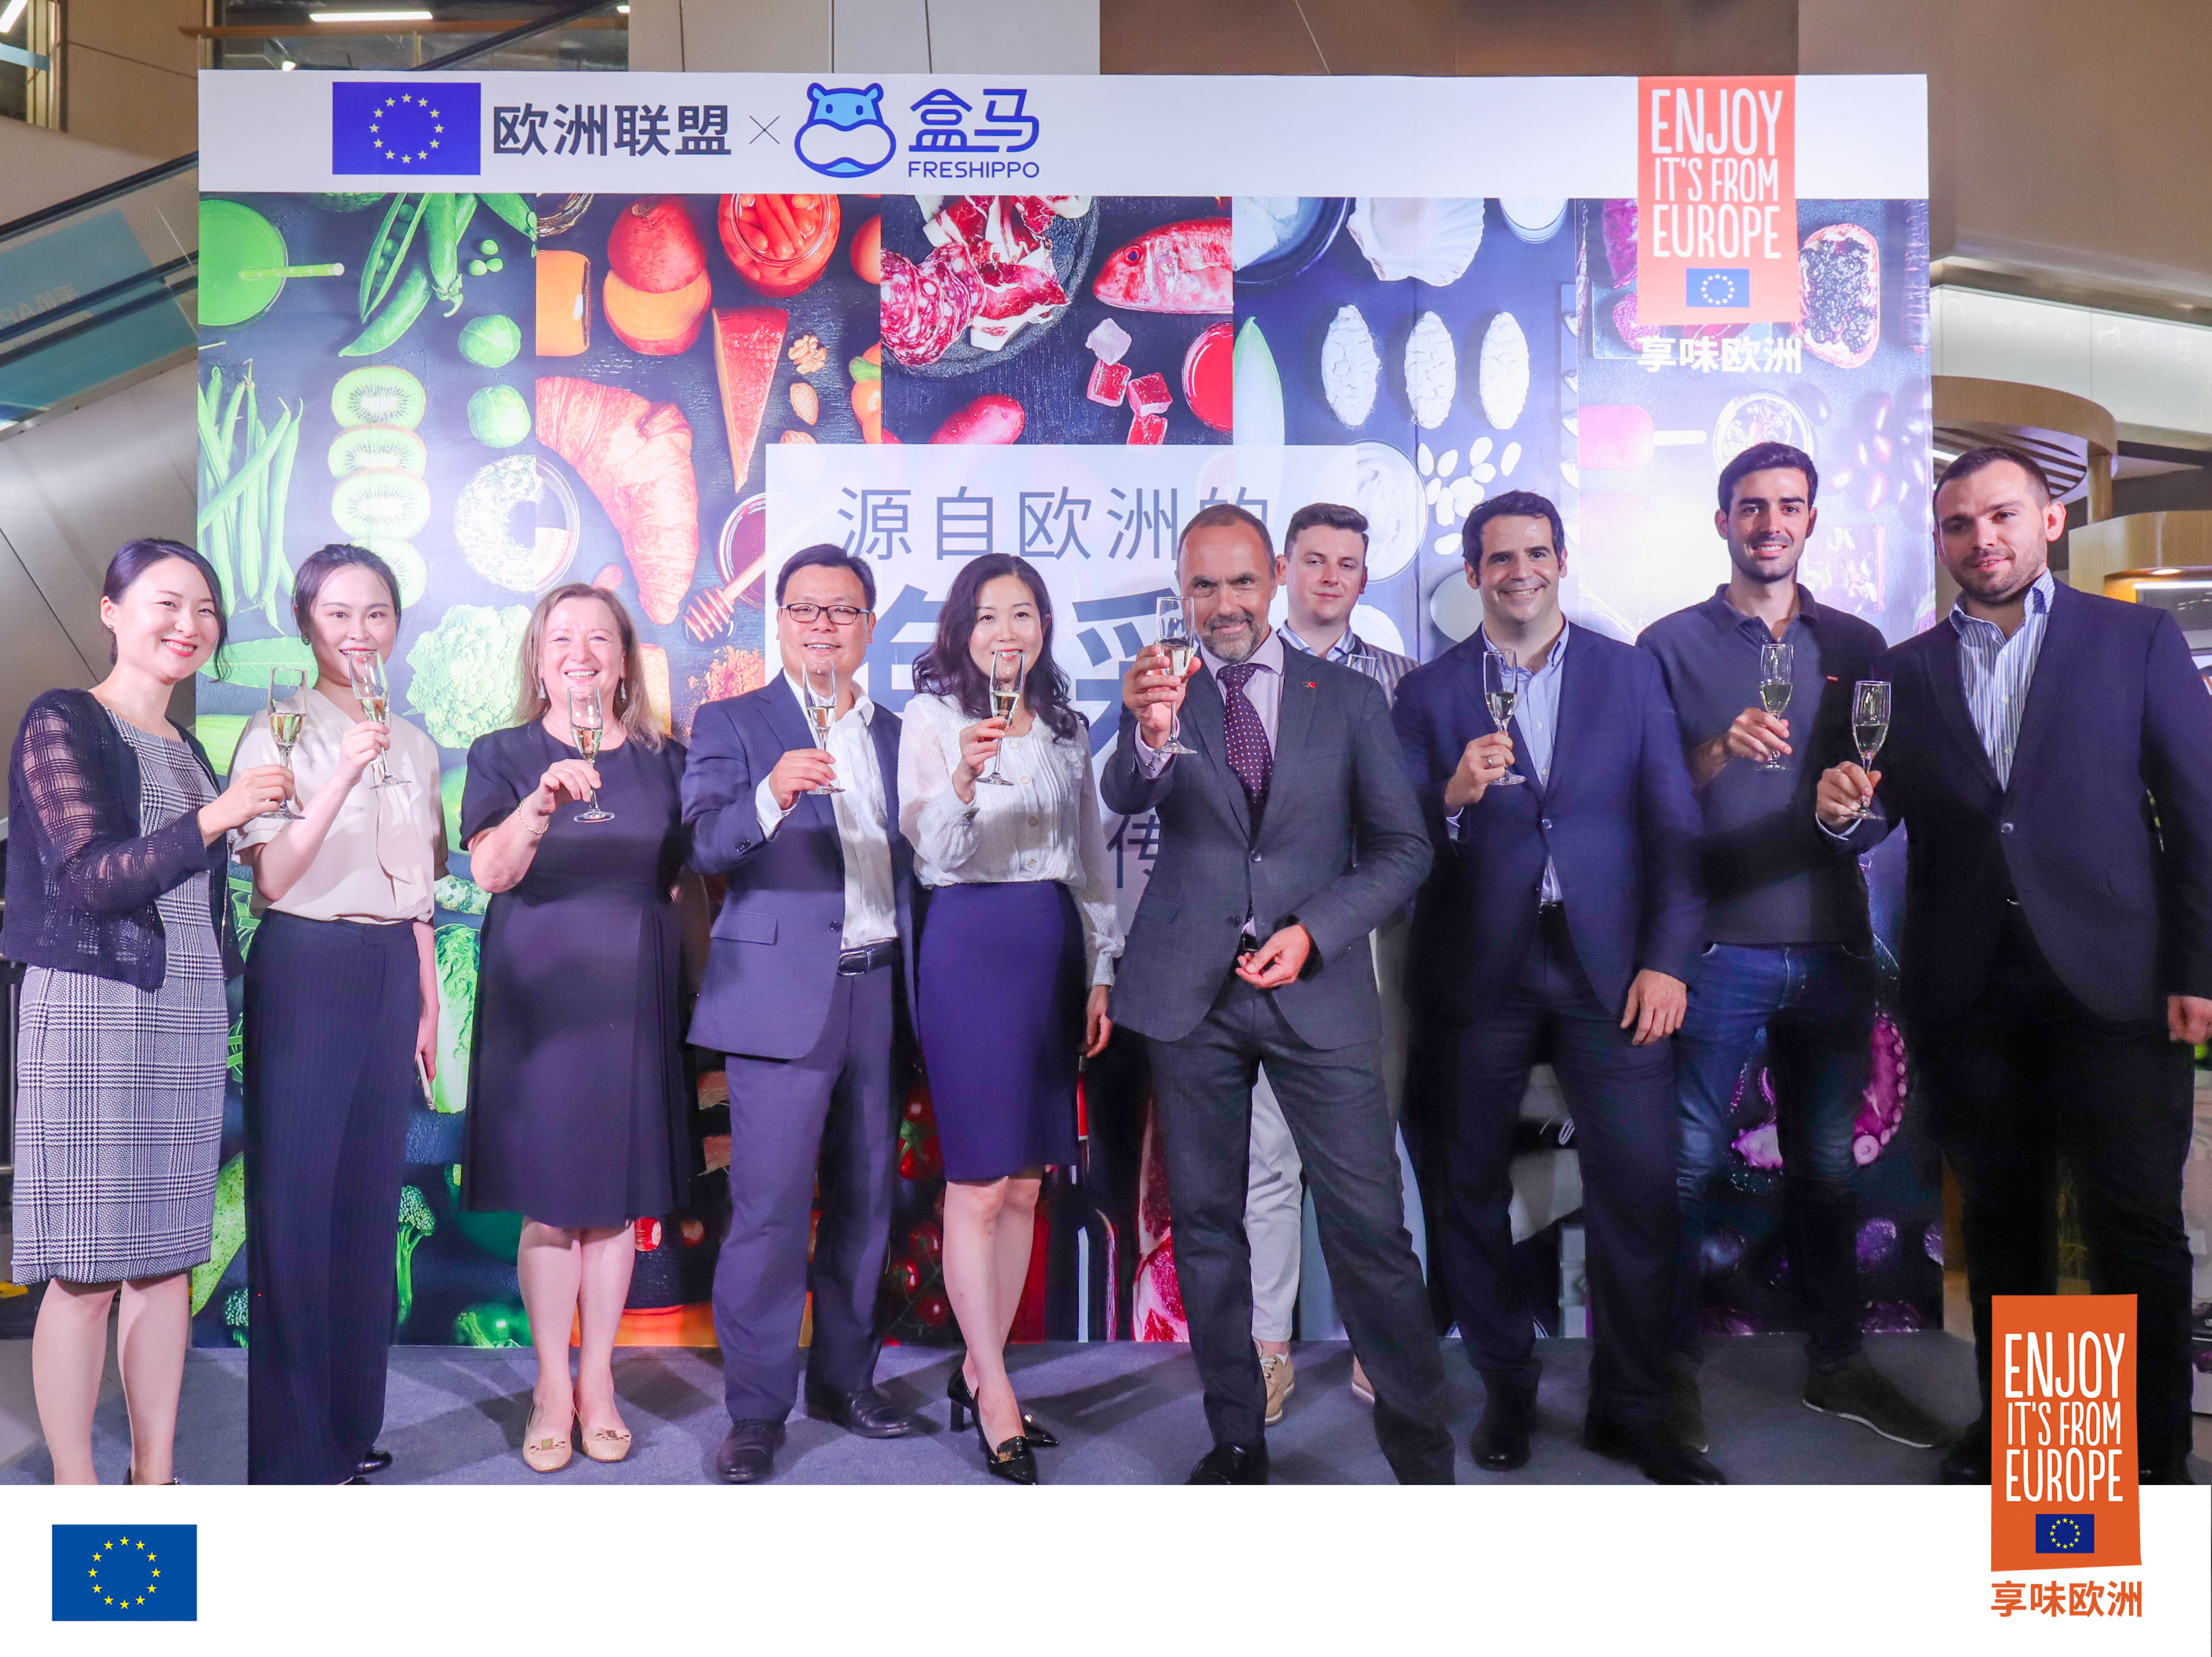 Chinese and EU representatives raising glasses. 